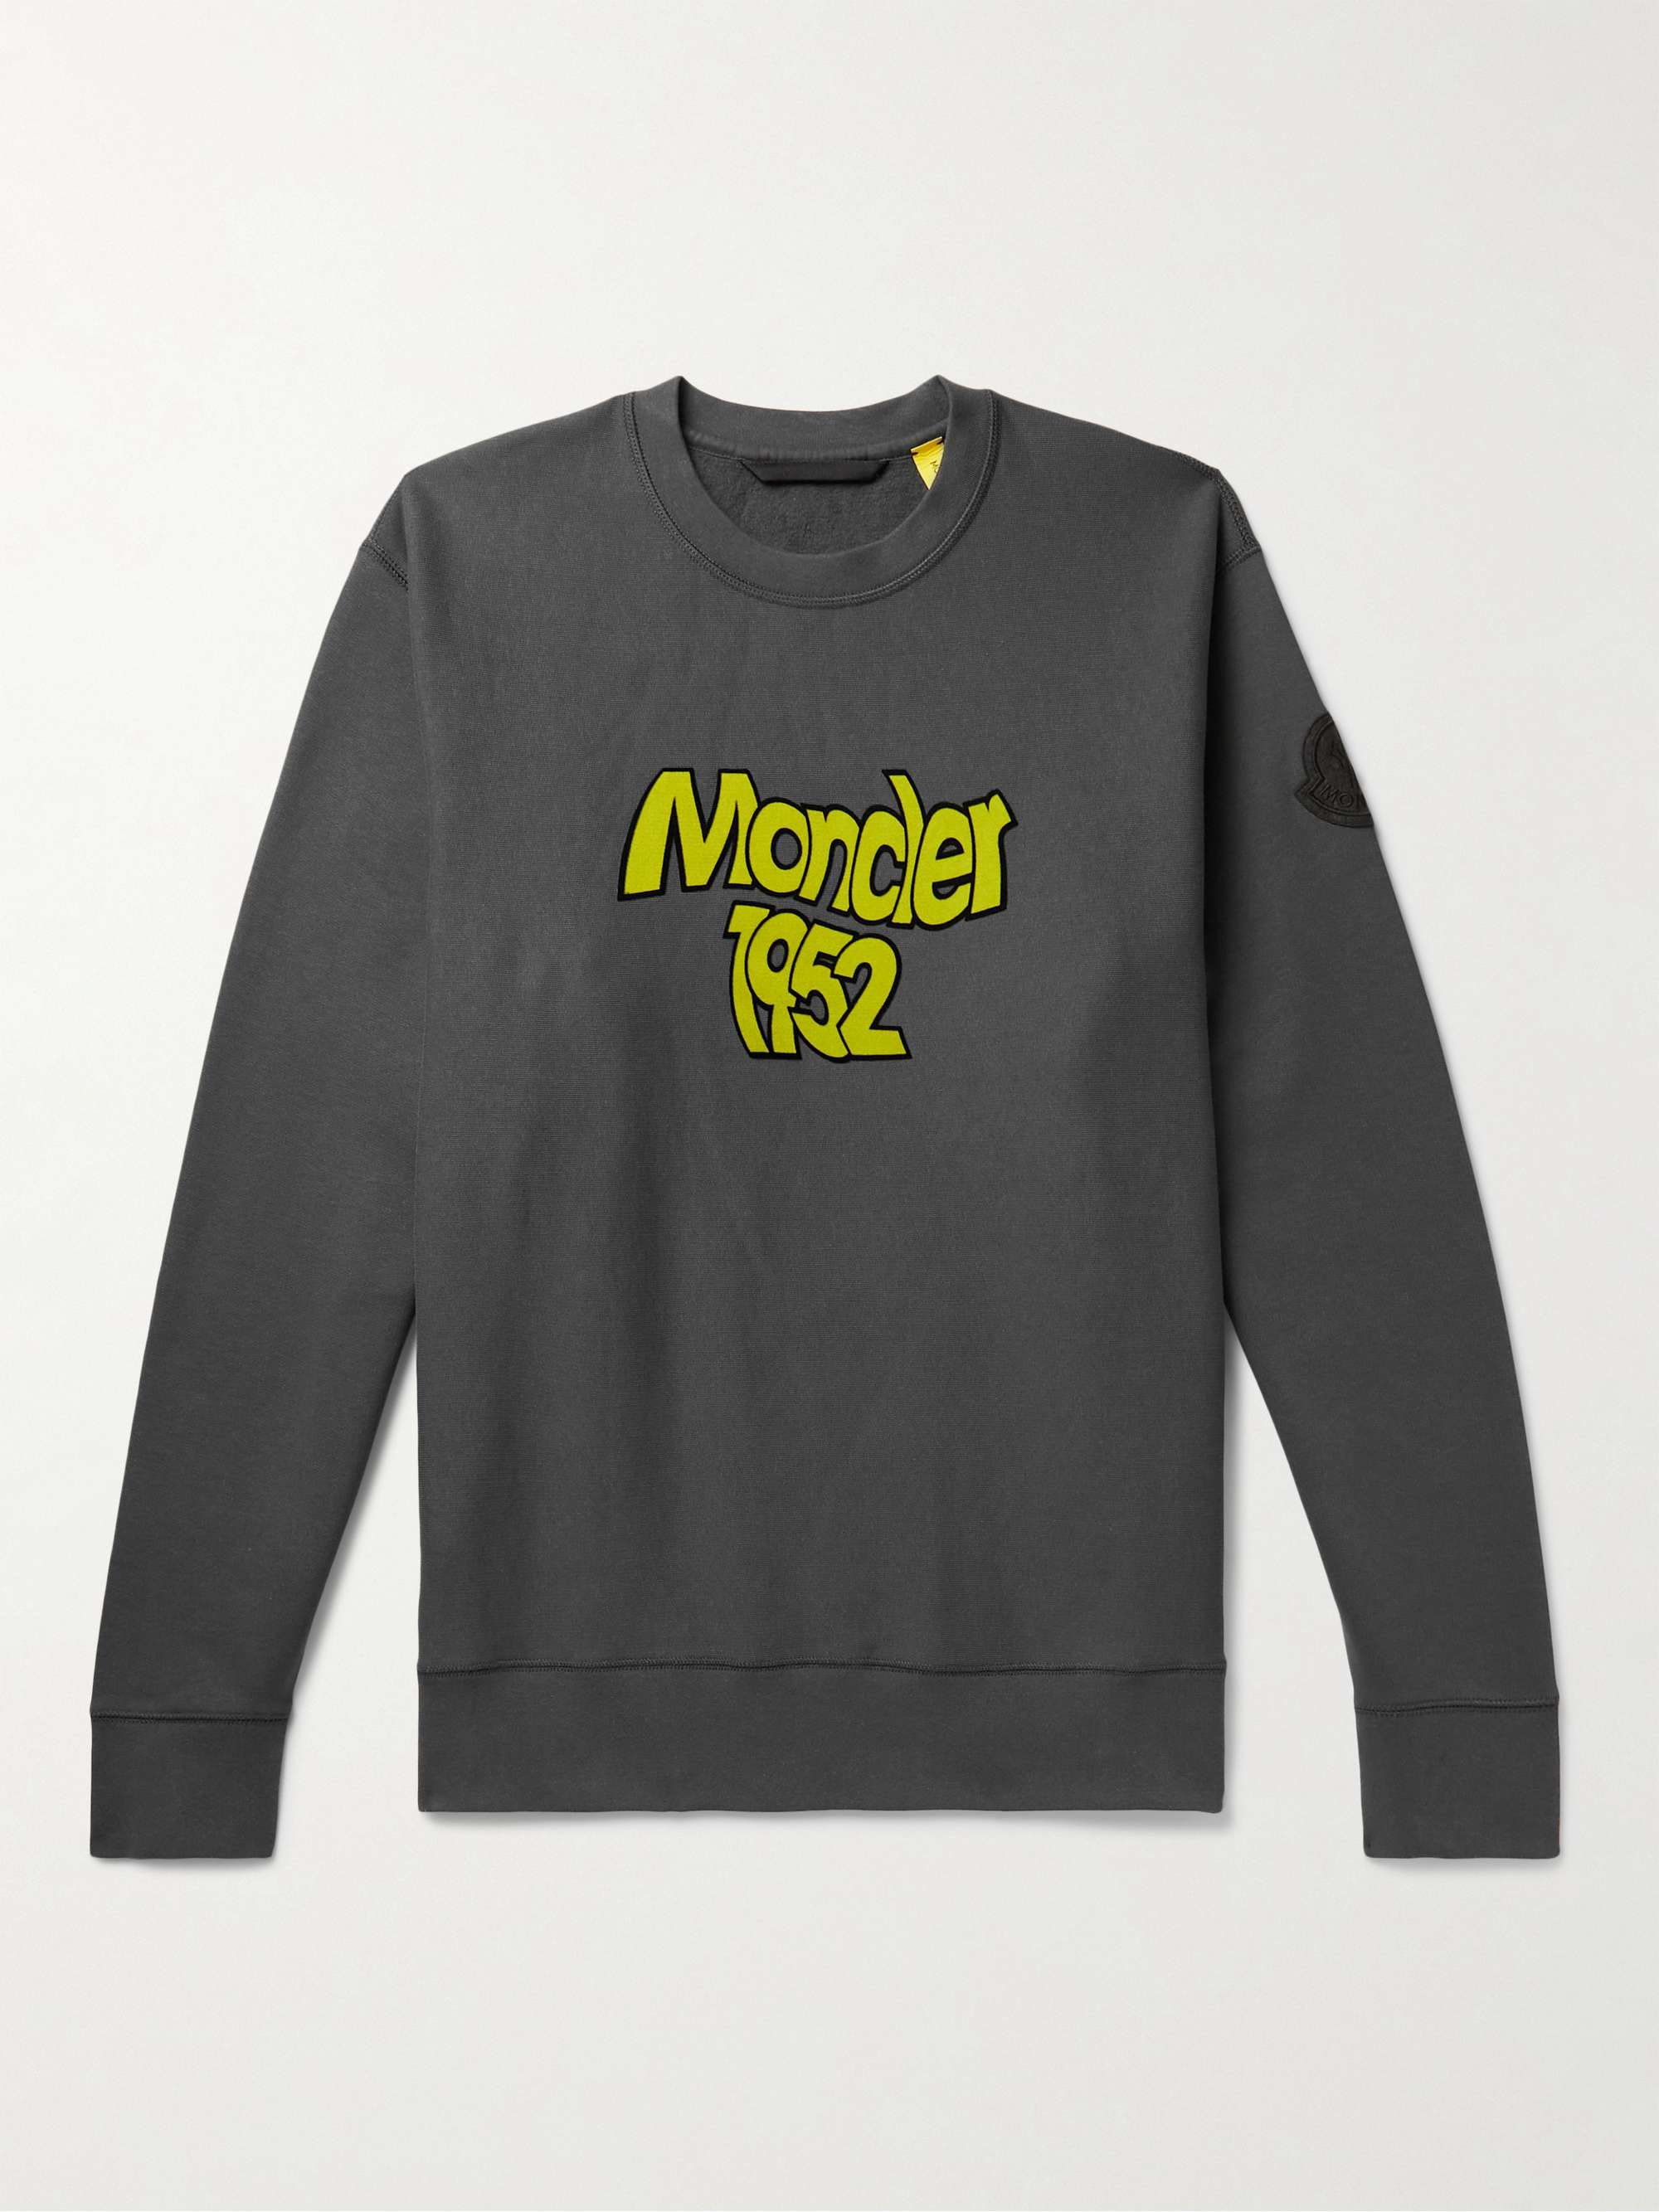 MONCLER GENIUS 2 Moncler 1952 Logo-Flocked Cotton-Jersey Sweatshirt for Men  | MR PORTER